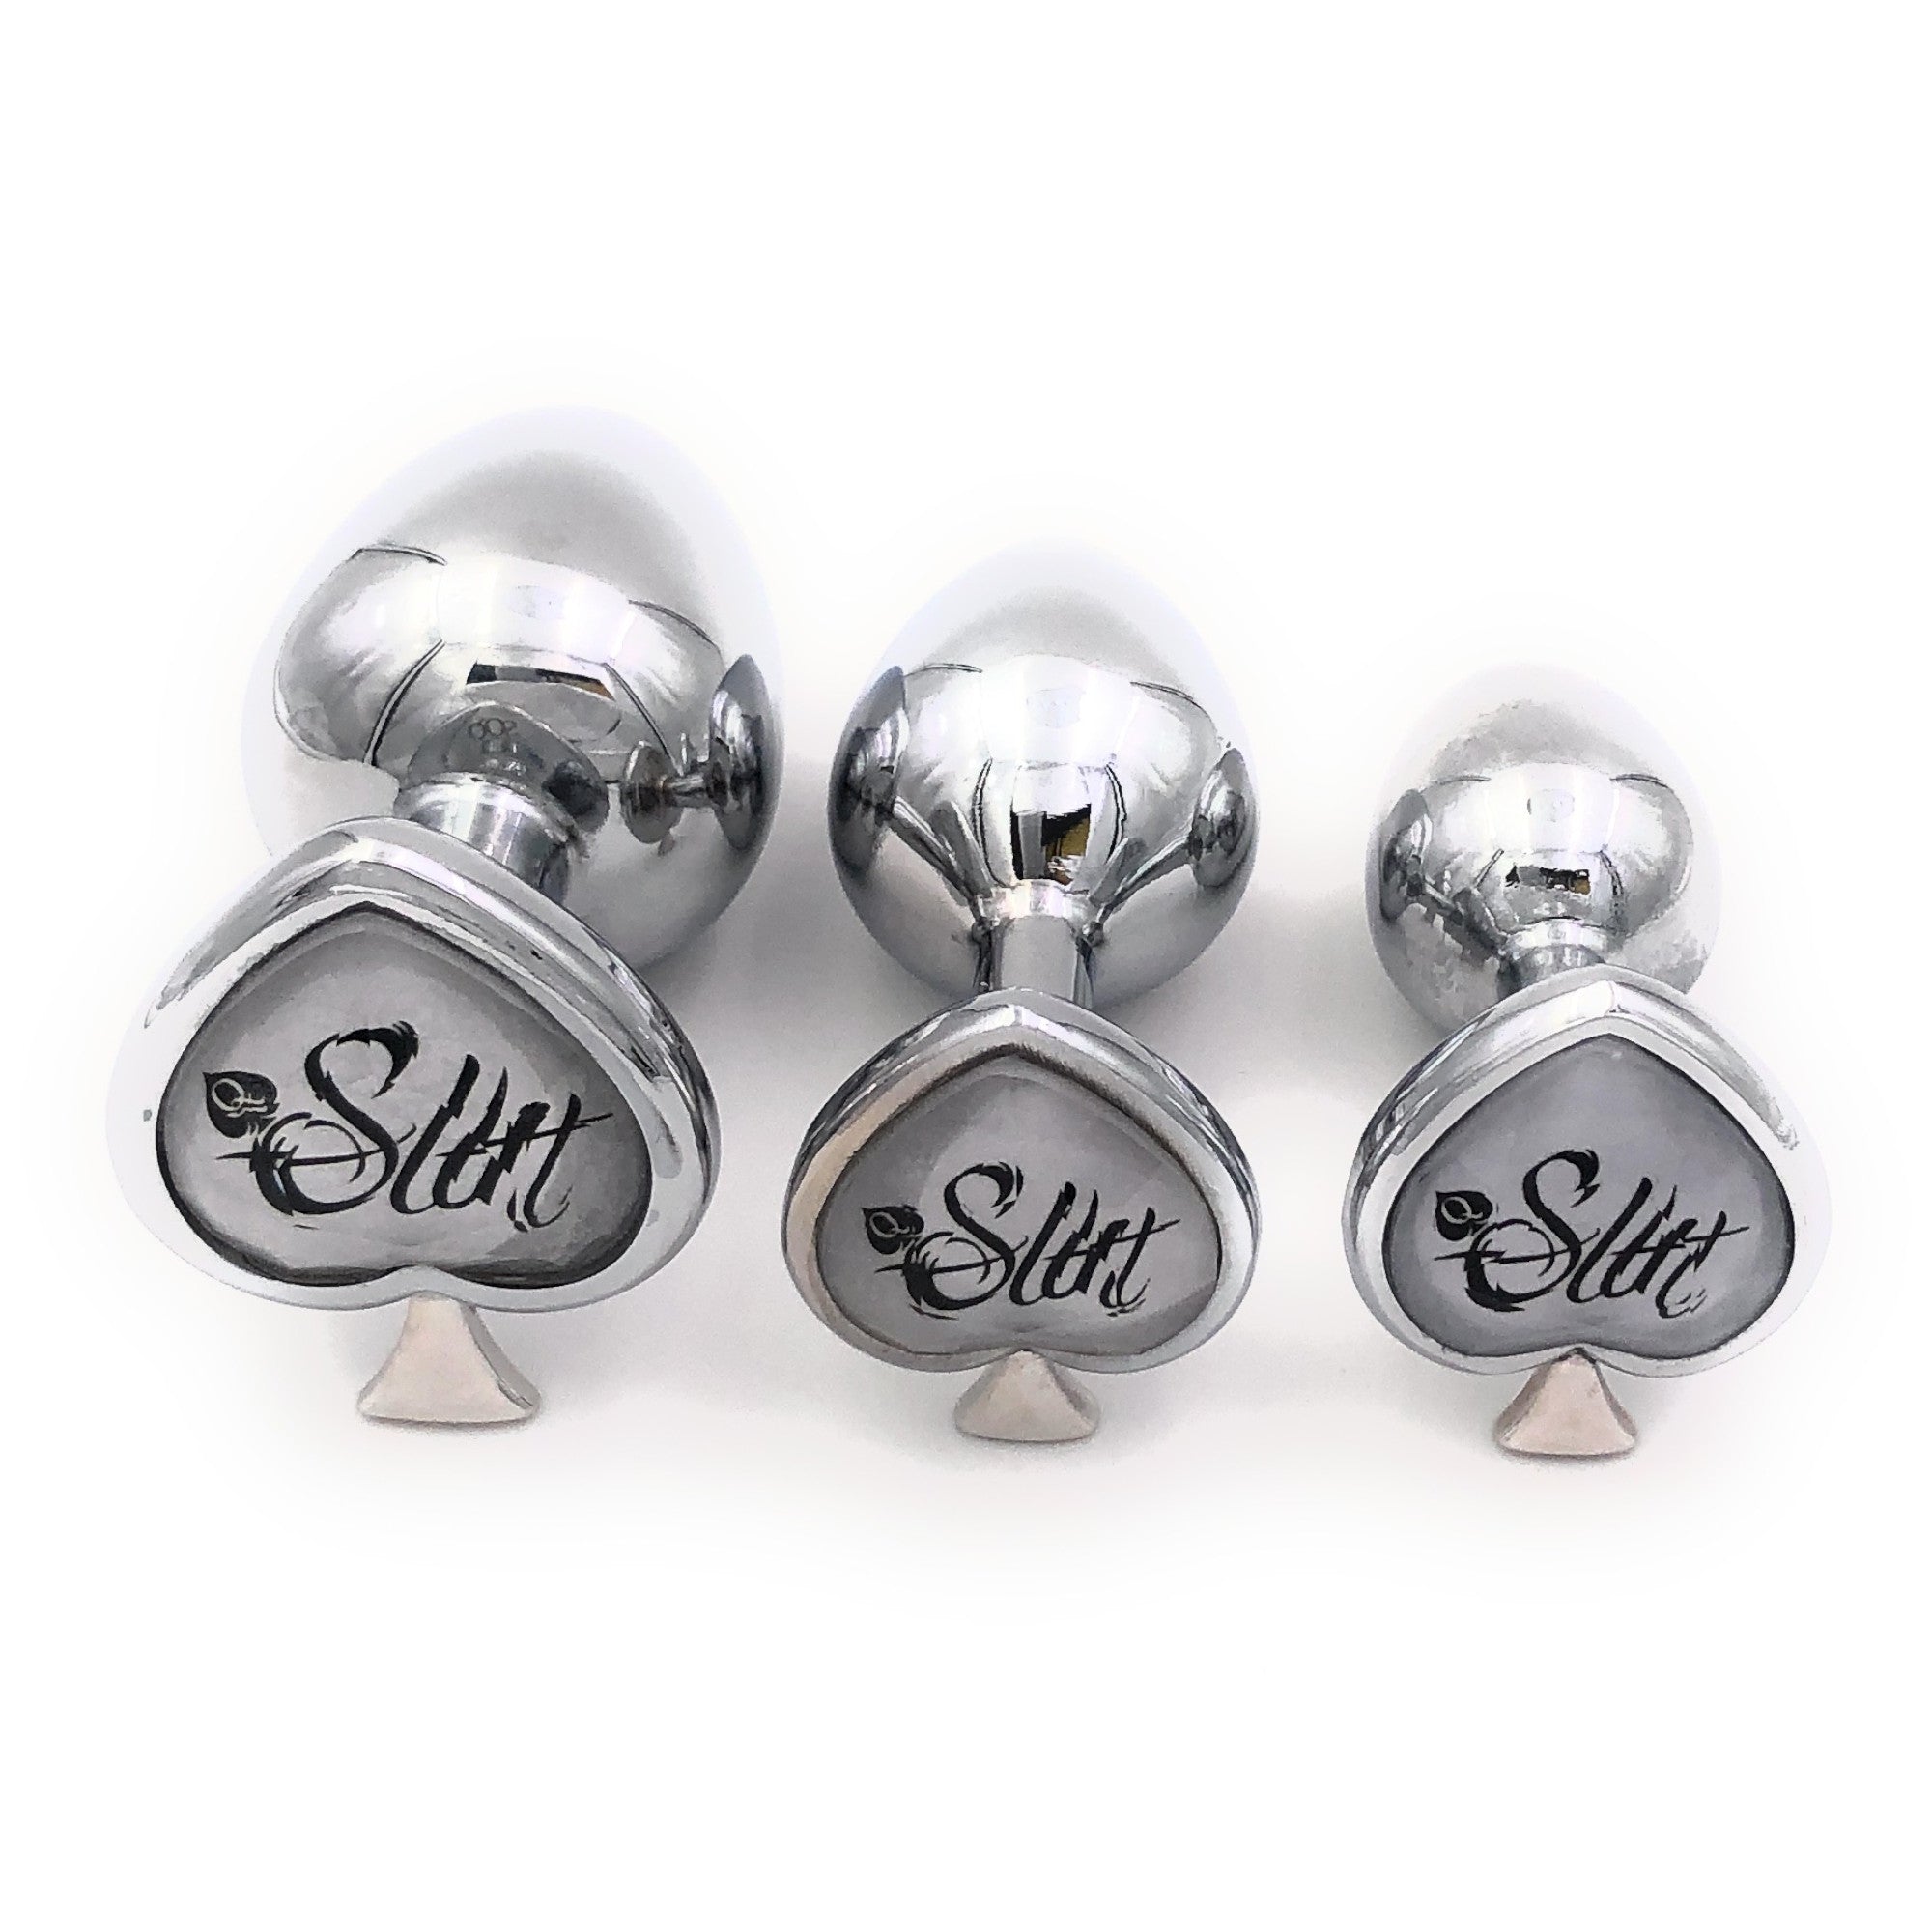 QOS SLUT Q & Spade shaped Silver Anal Butt Plug